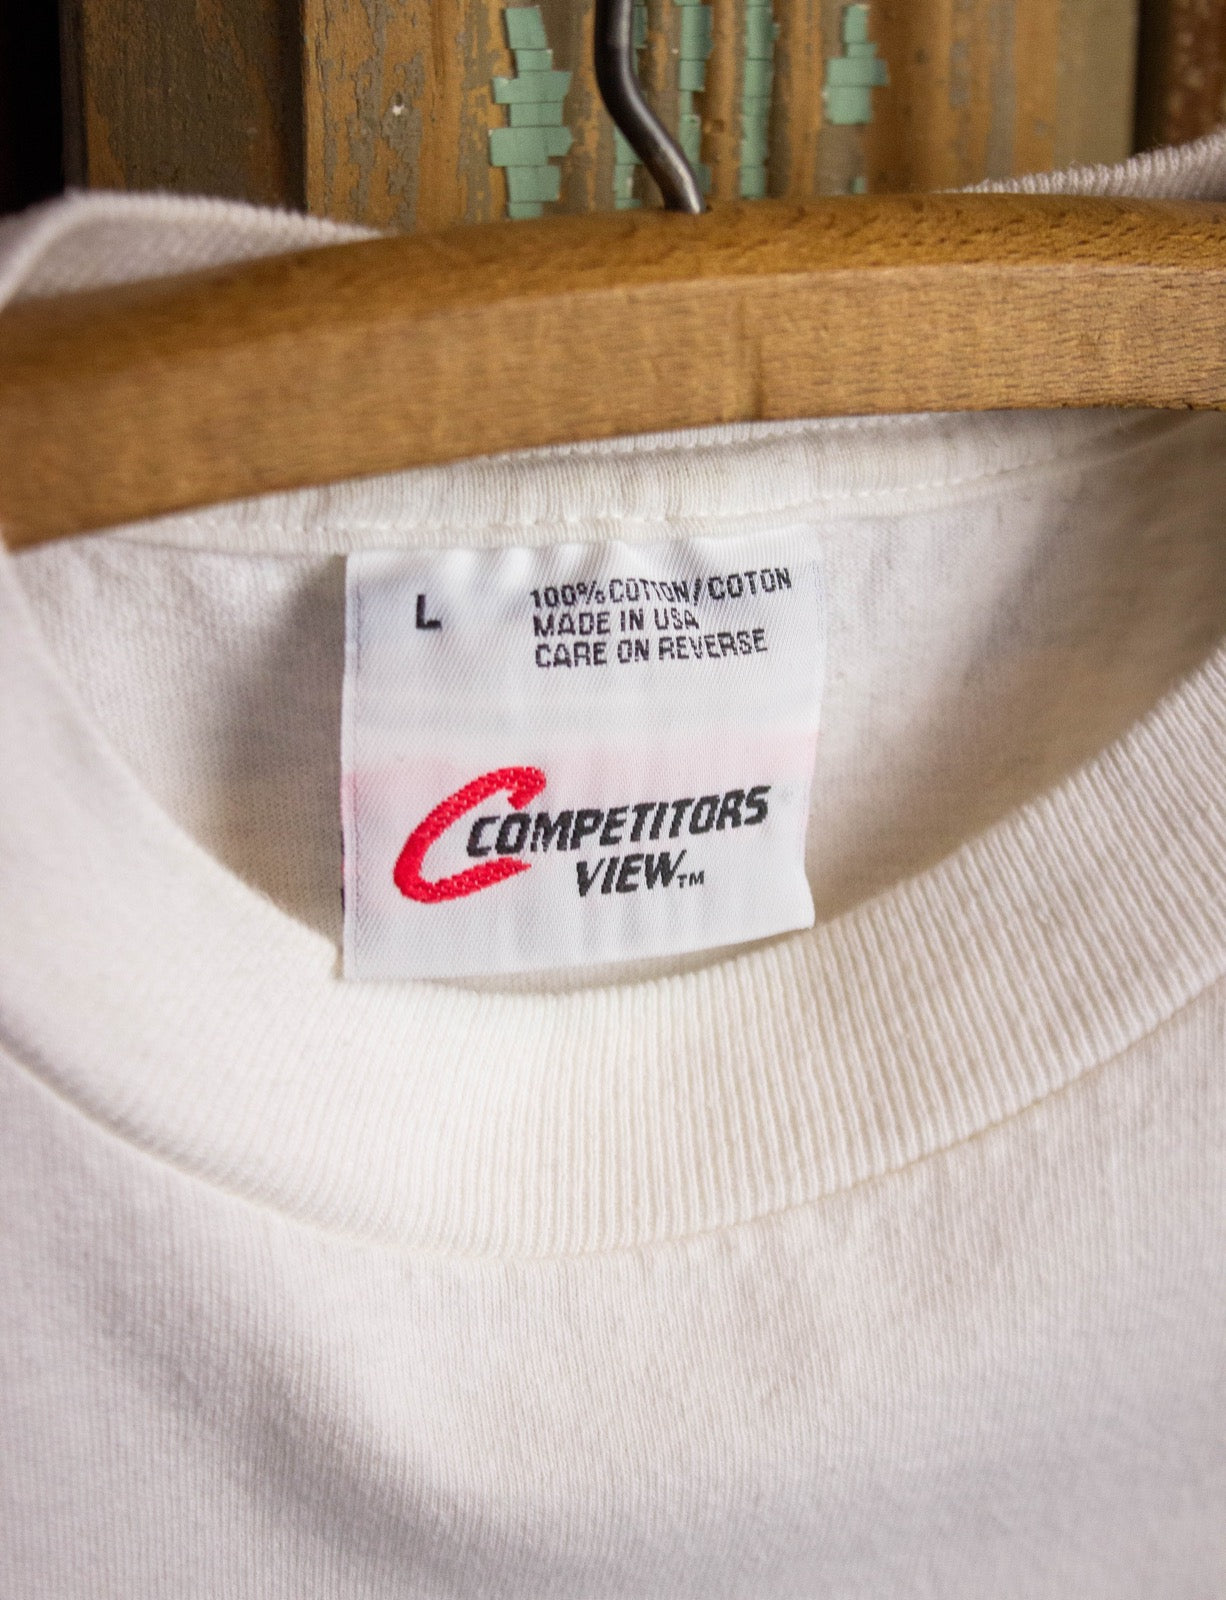 Vintage Dale Earnhardt The Legend Nascar Graphic T Shirt 90s White Large